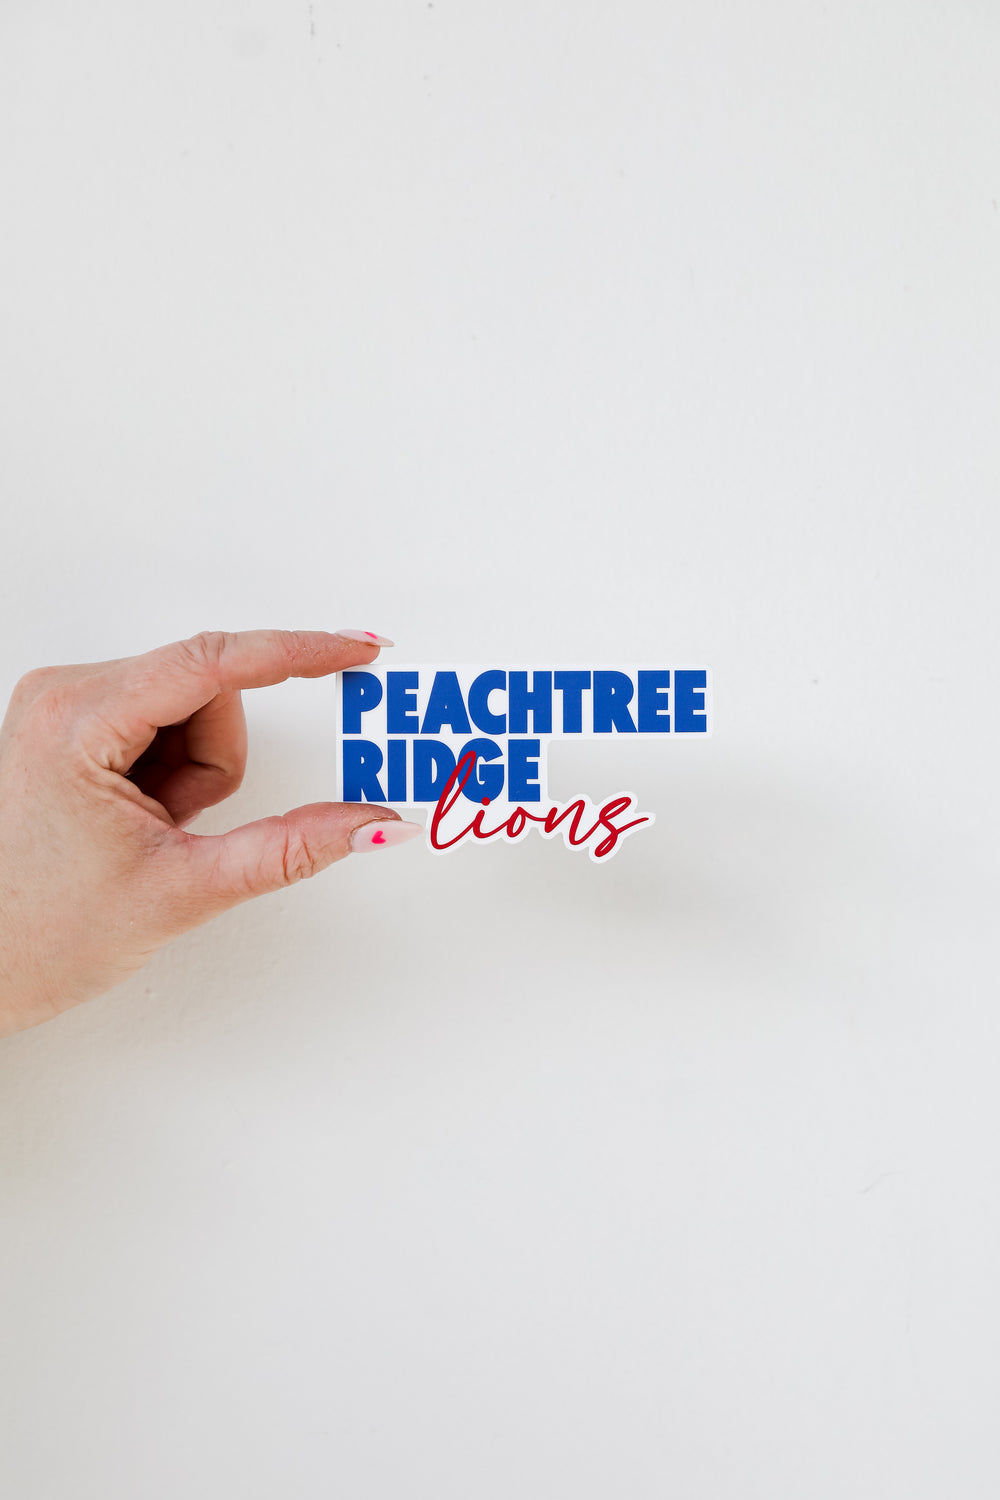 Peachtree Ridge Lions Sticker flat lay